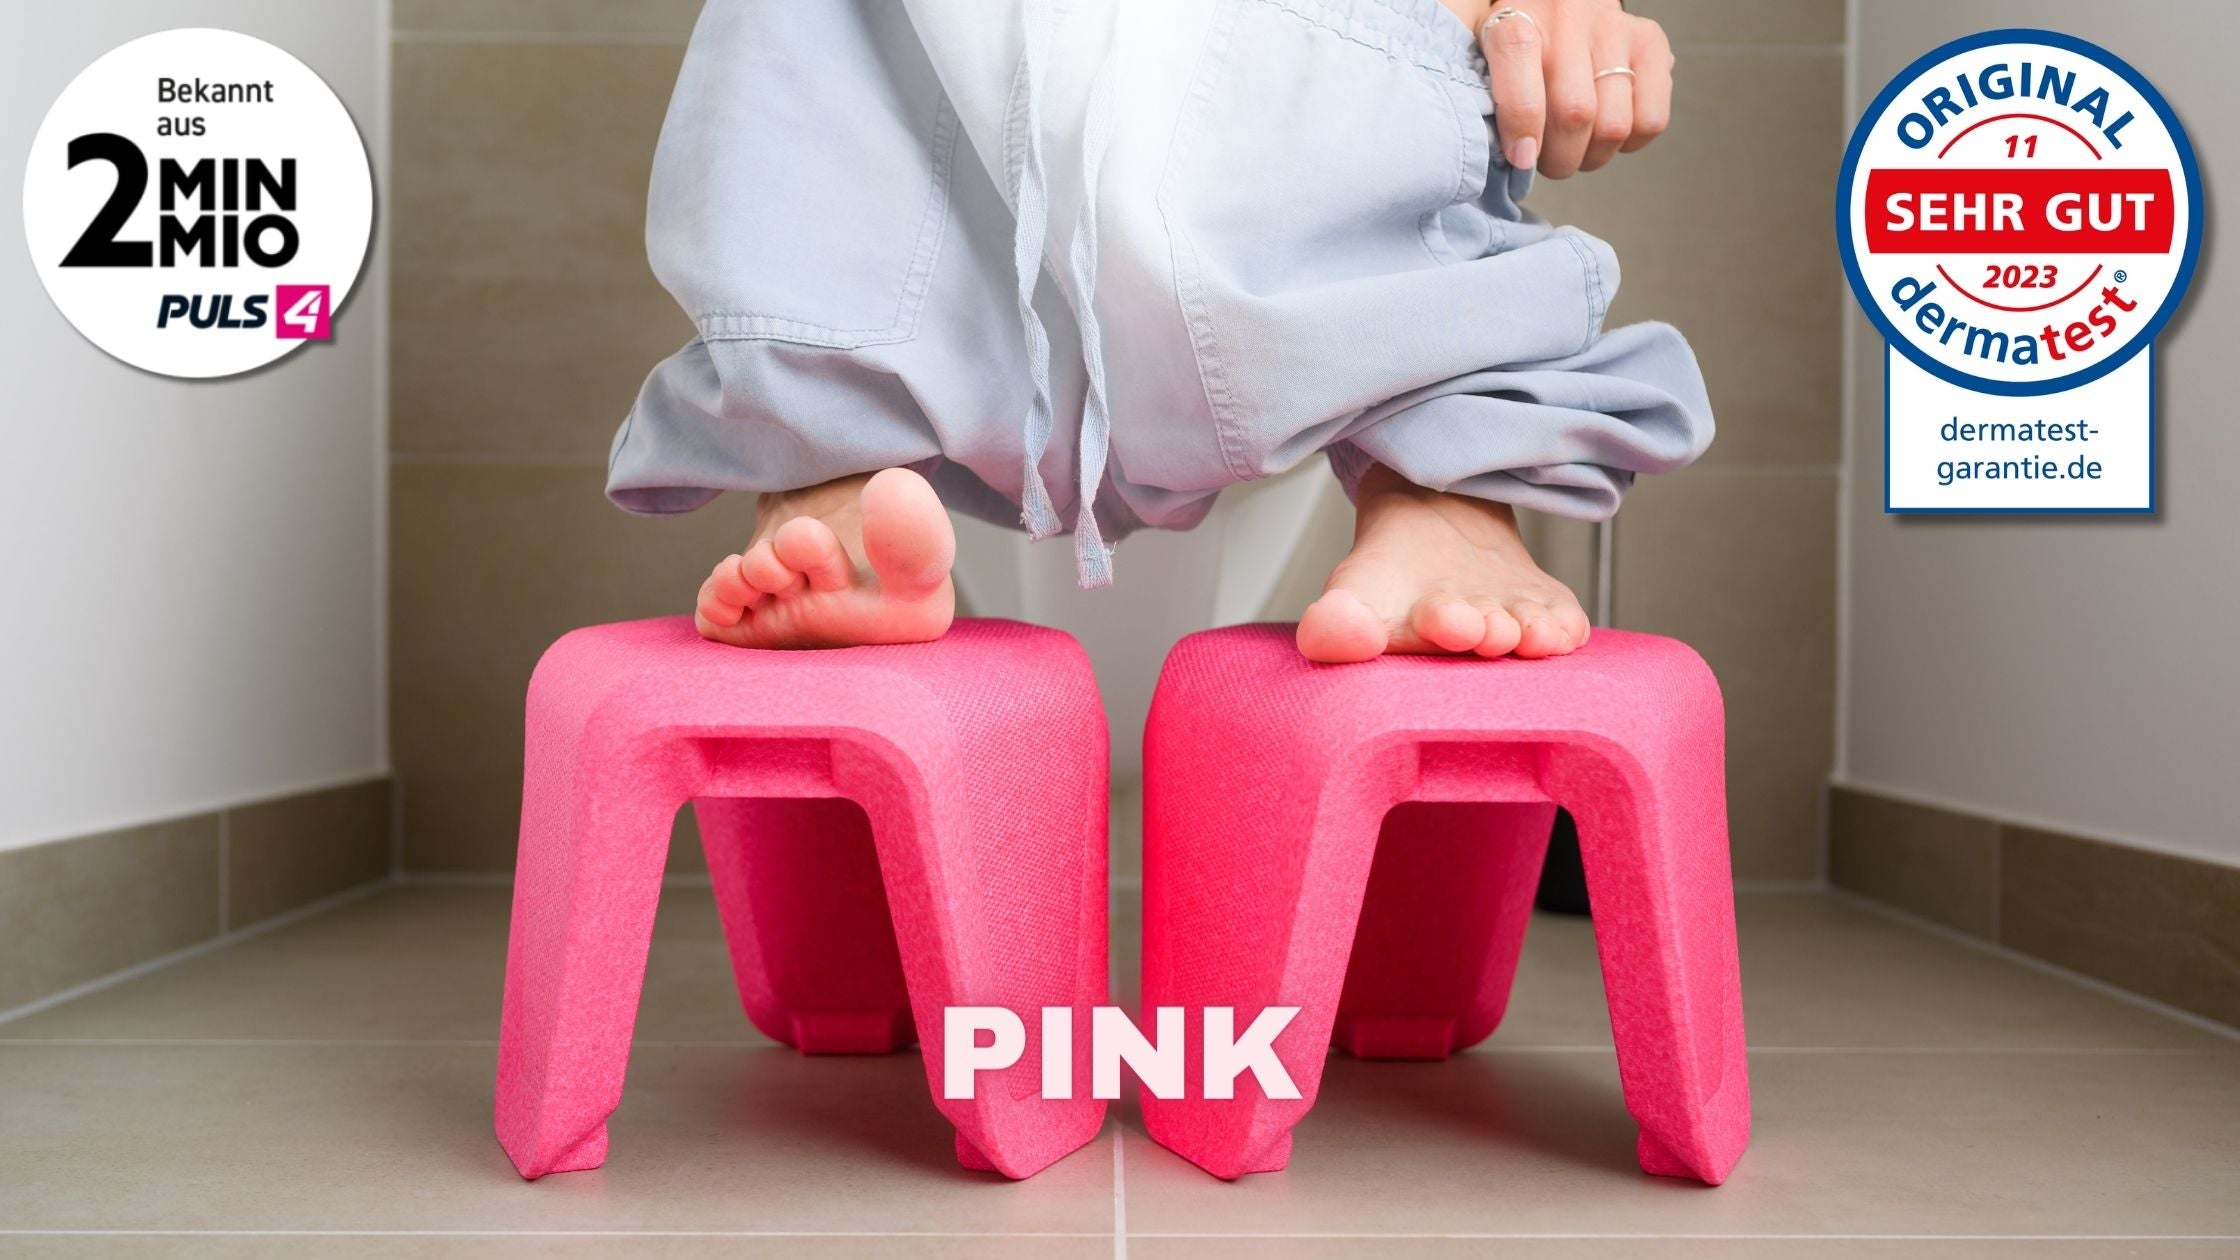 stuul toilet stool pink